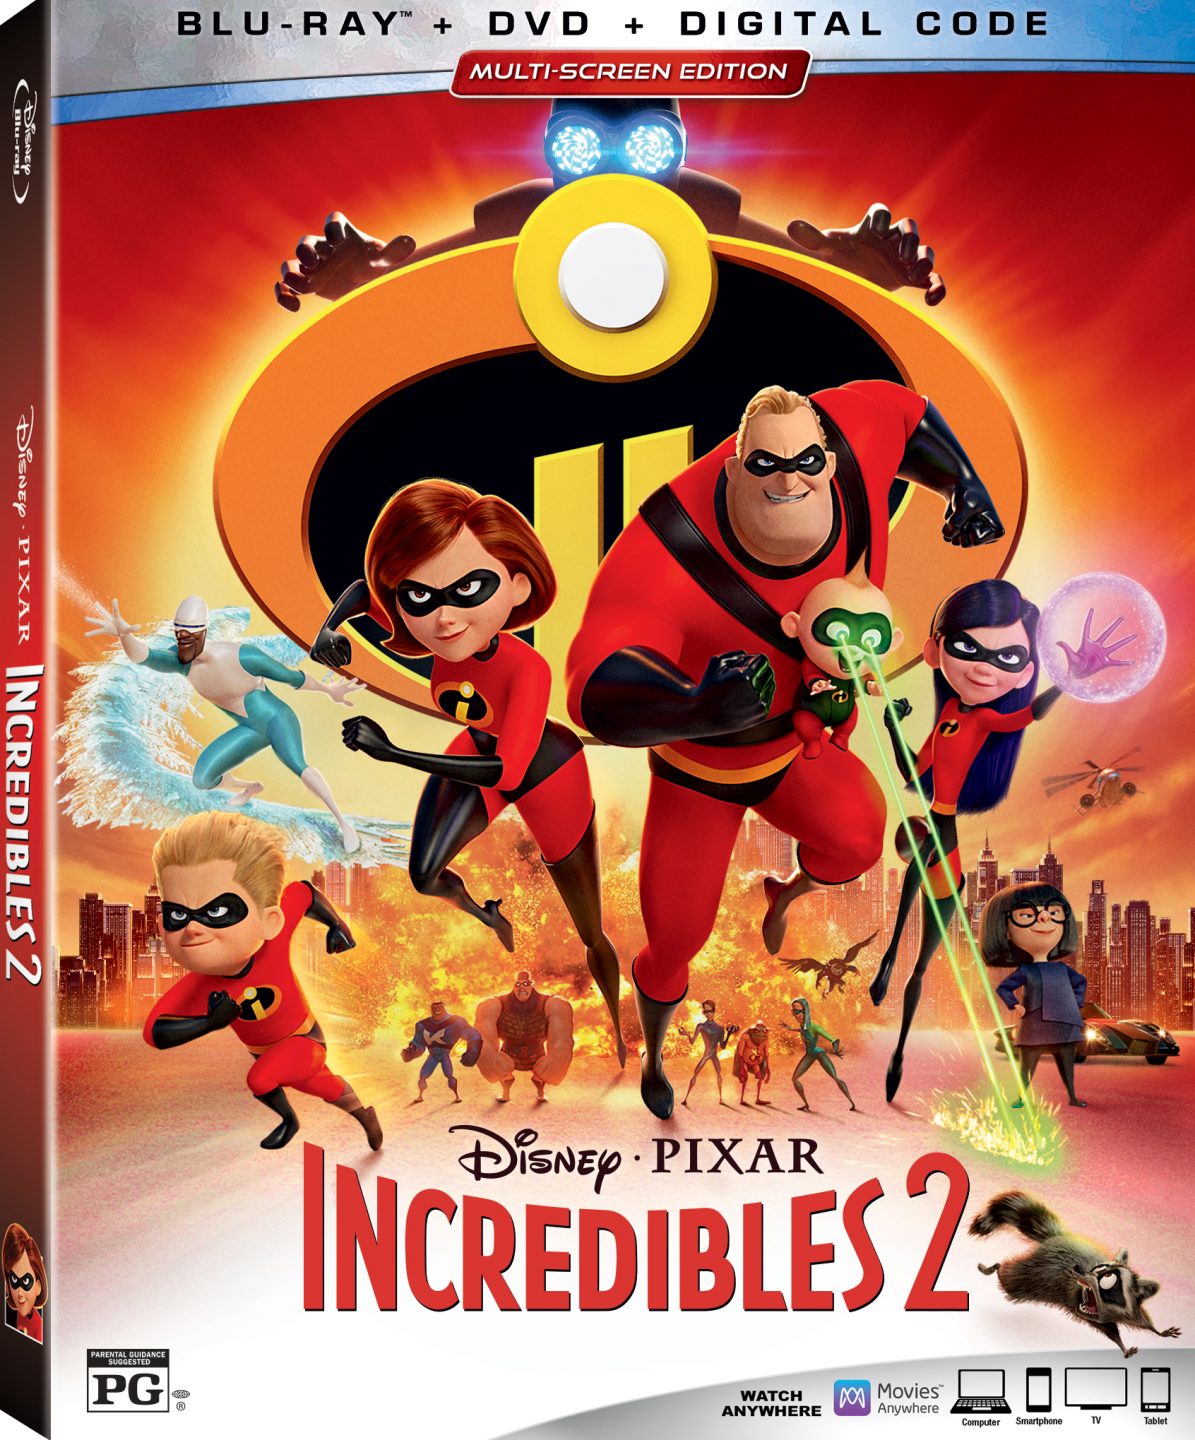 Incredibles 2 Blu-Ray Combo Pack cover (Walt Disney Studios Home Entertainment)